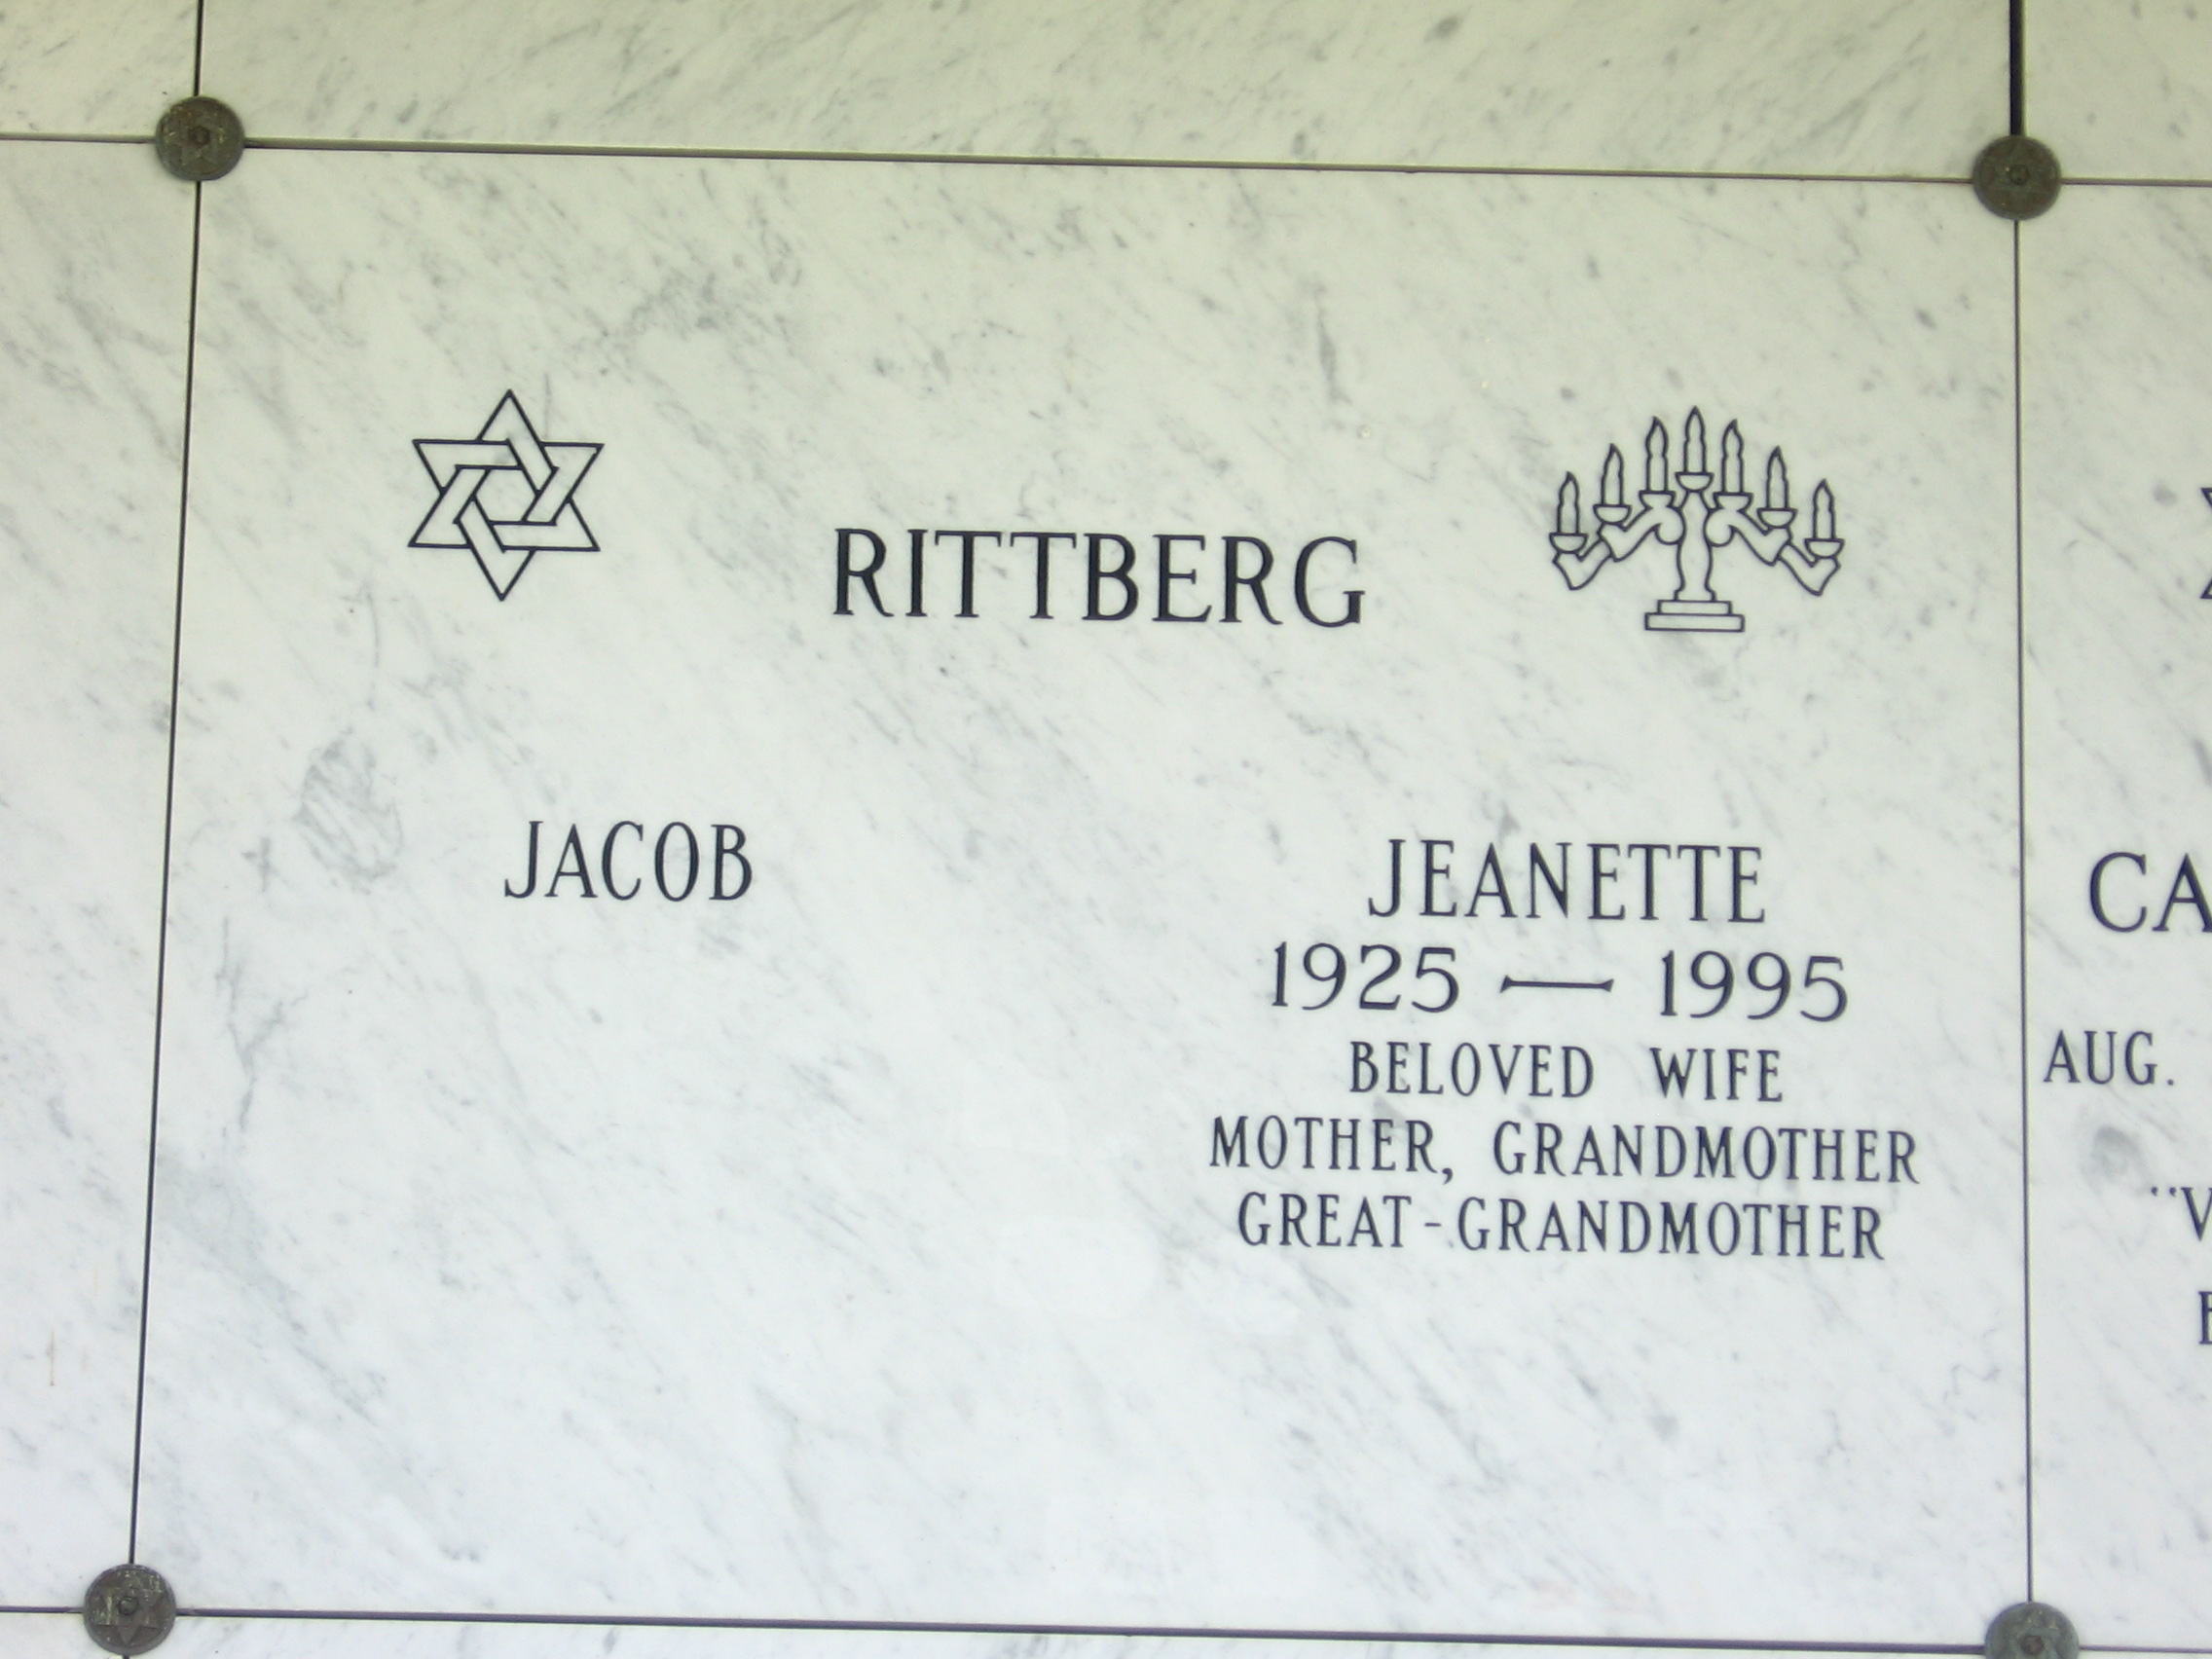 Jacob Rittberg